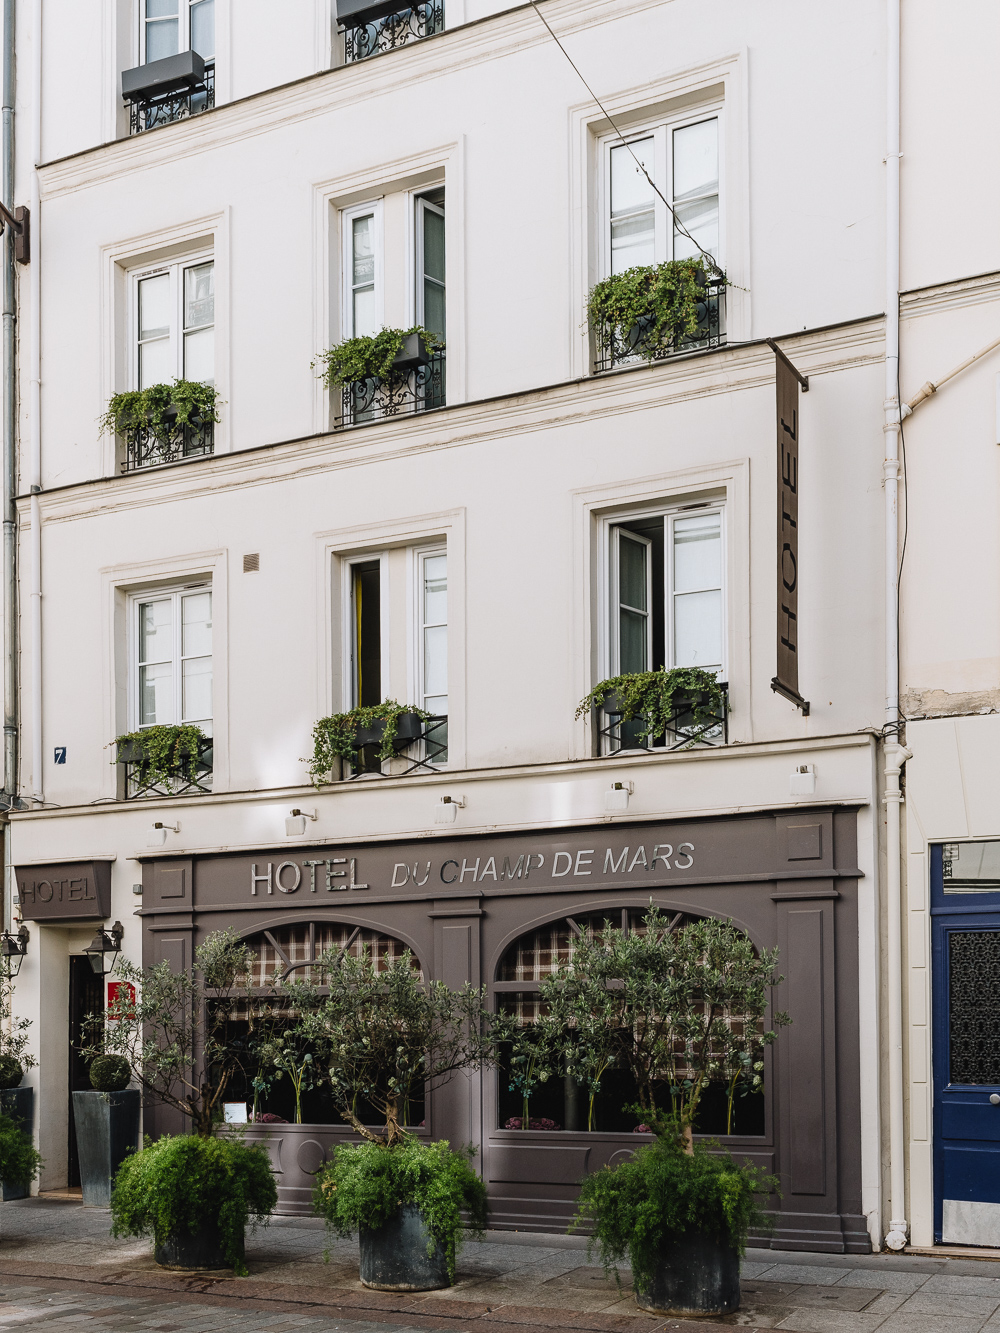 Best hotels in Paris near the Eiffel Tower